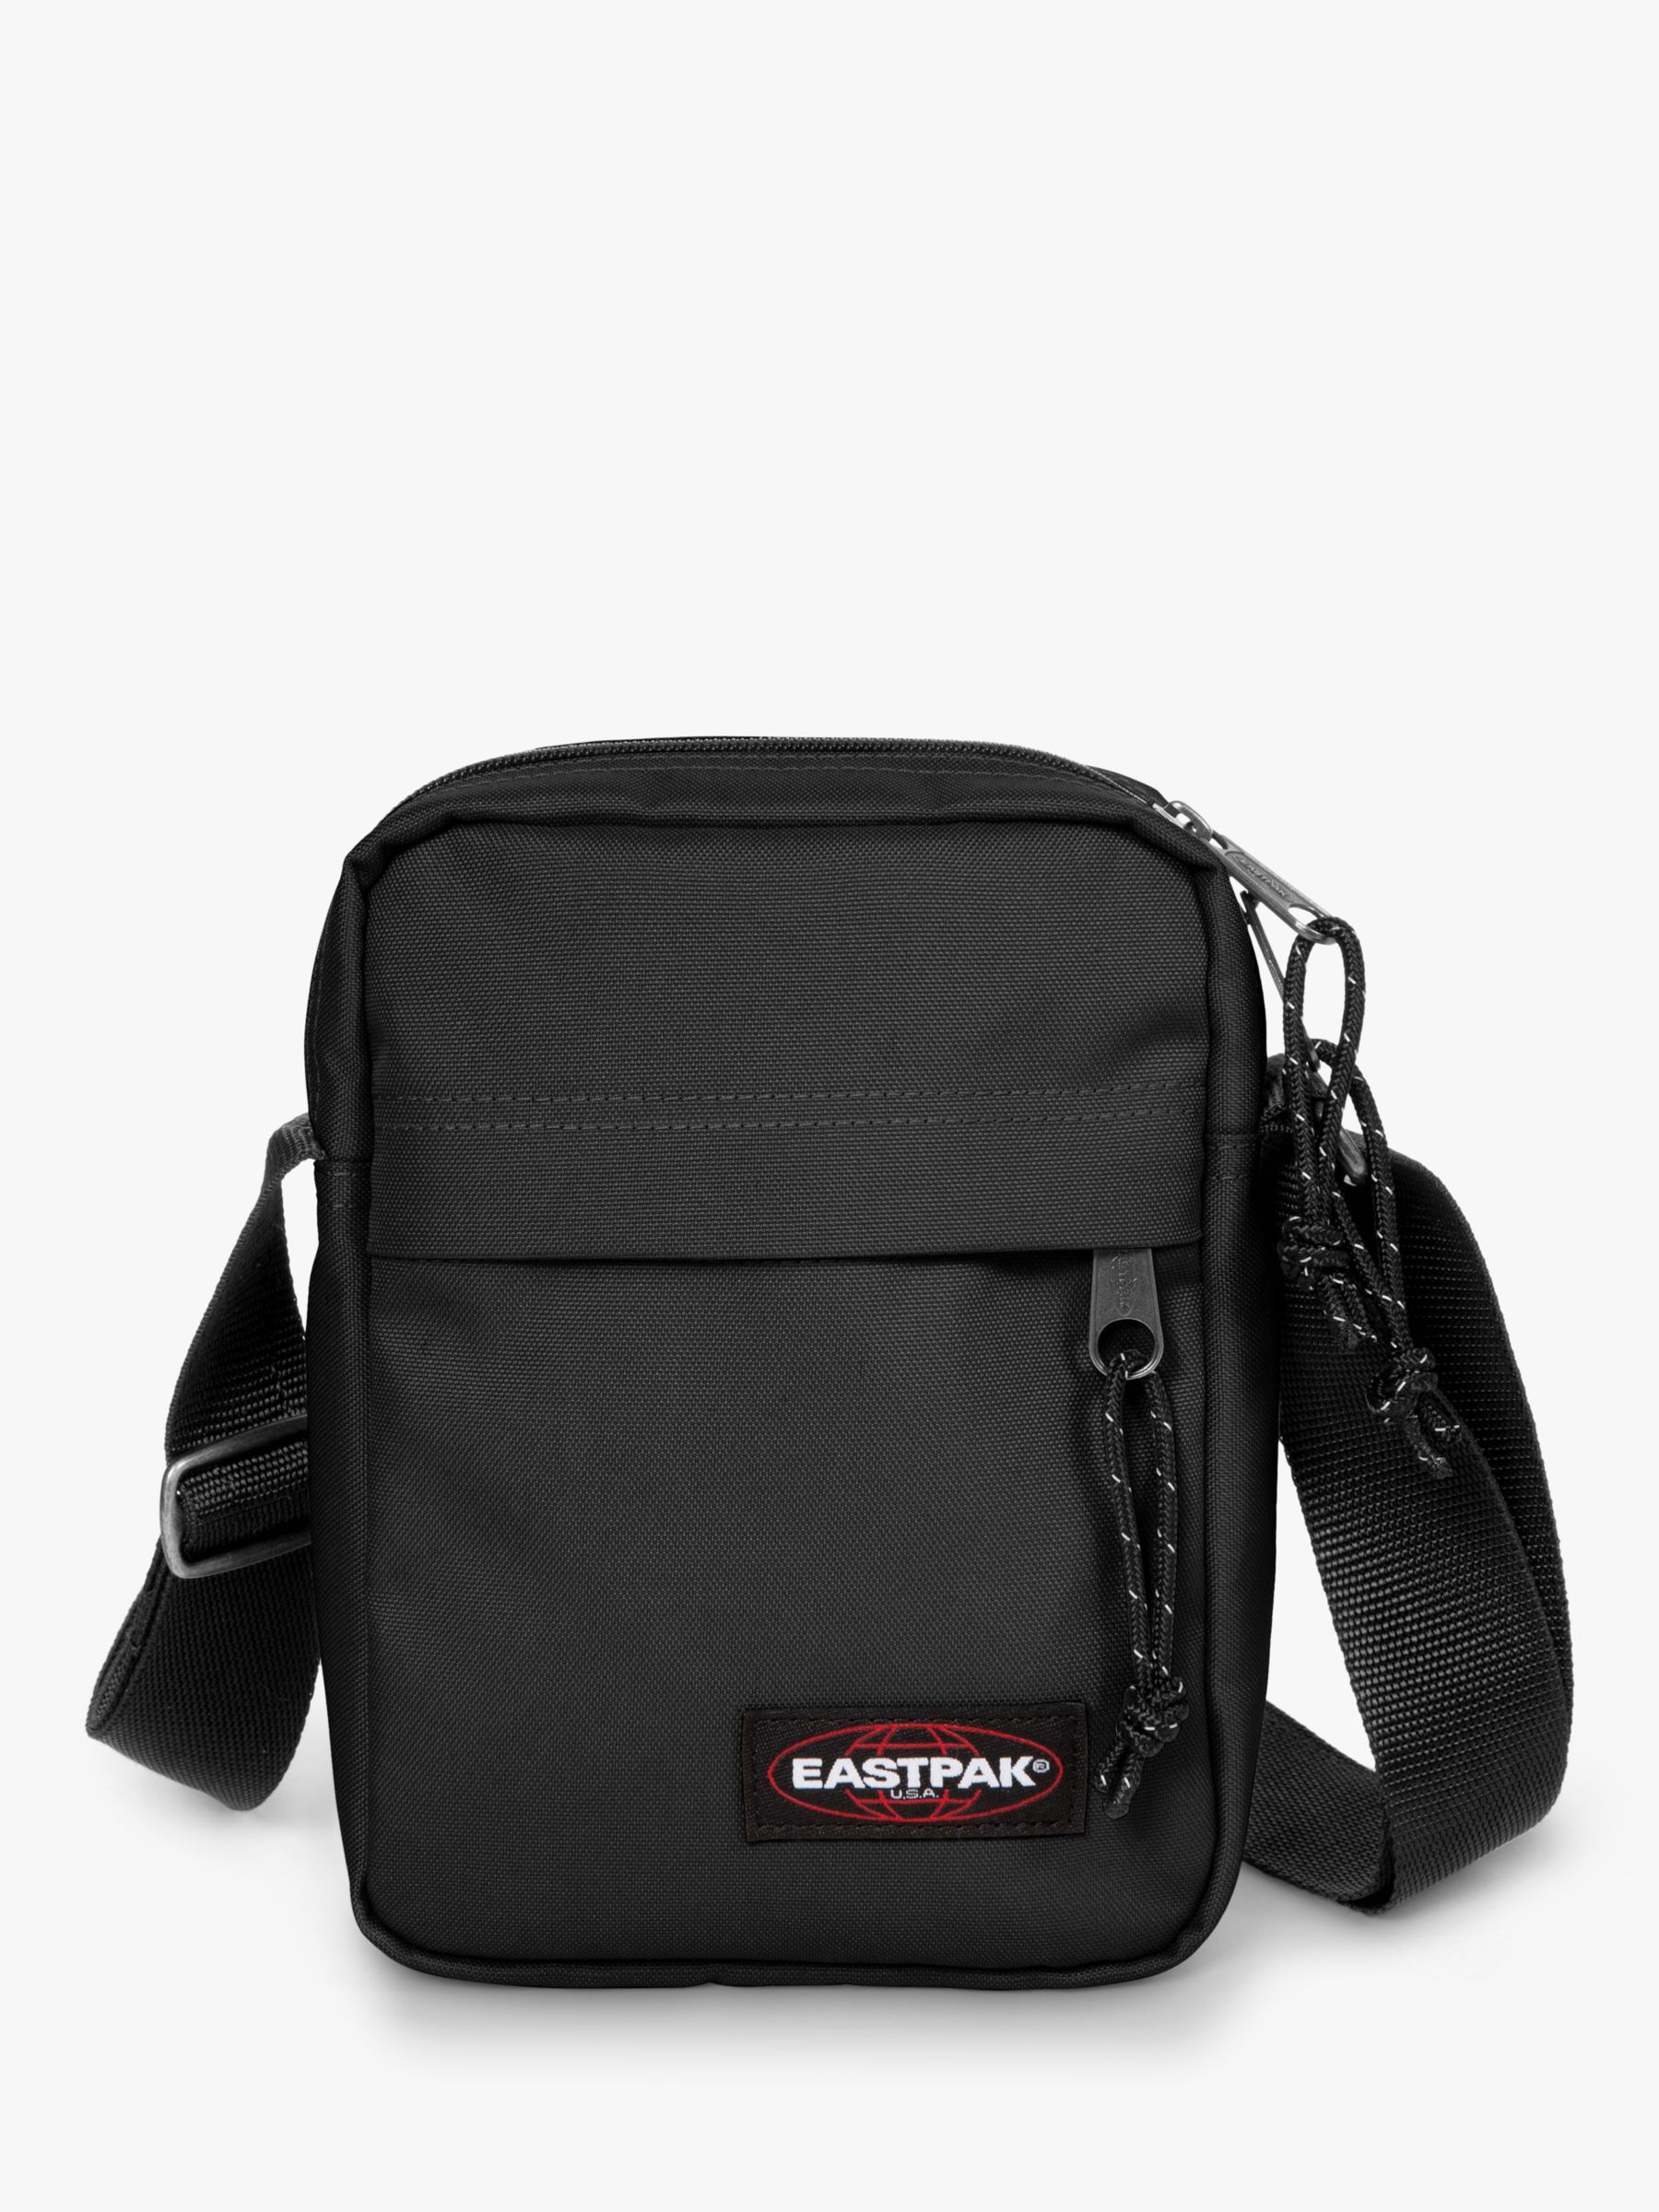 Eastpak The One Flight Bag, Black at John Lewis & Partners